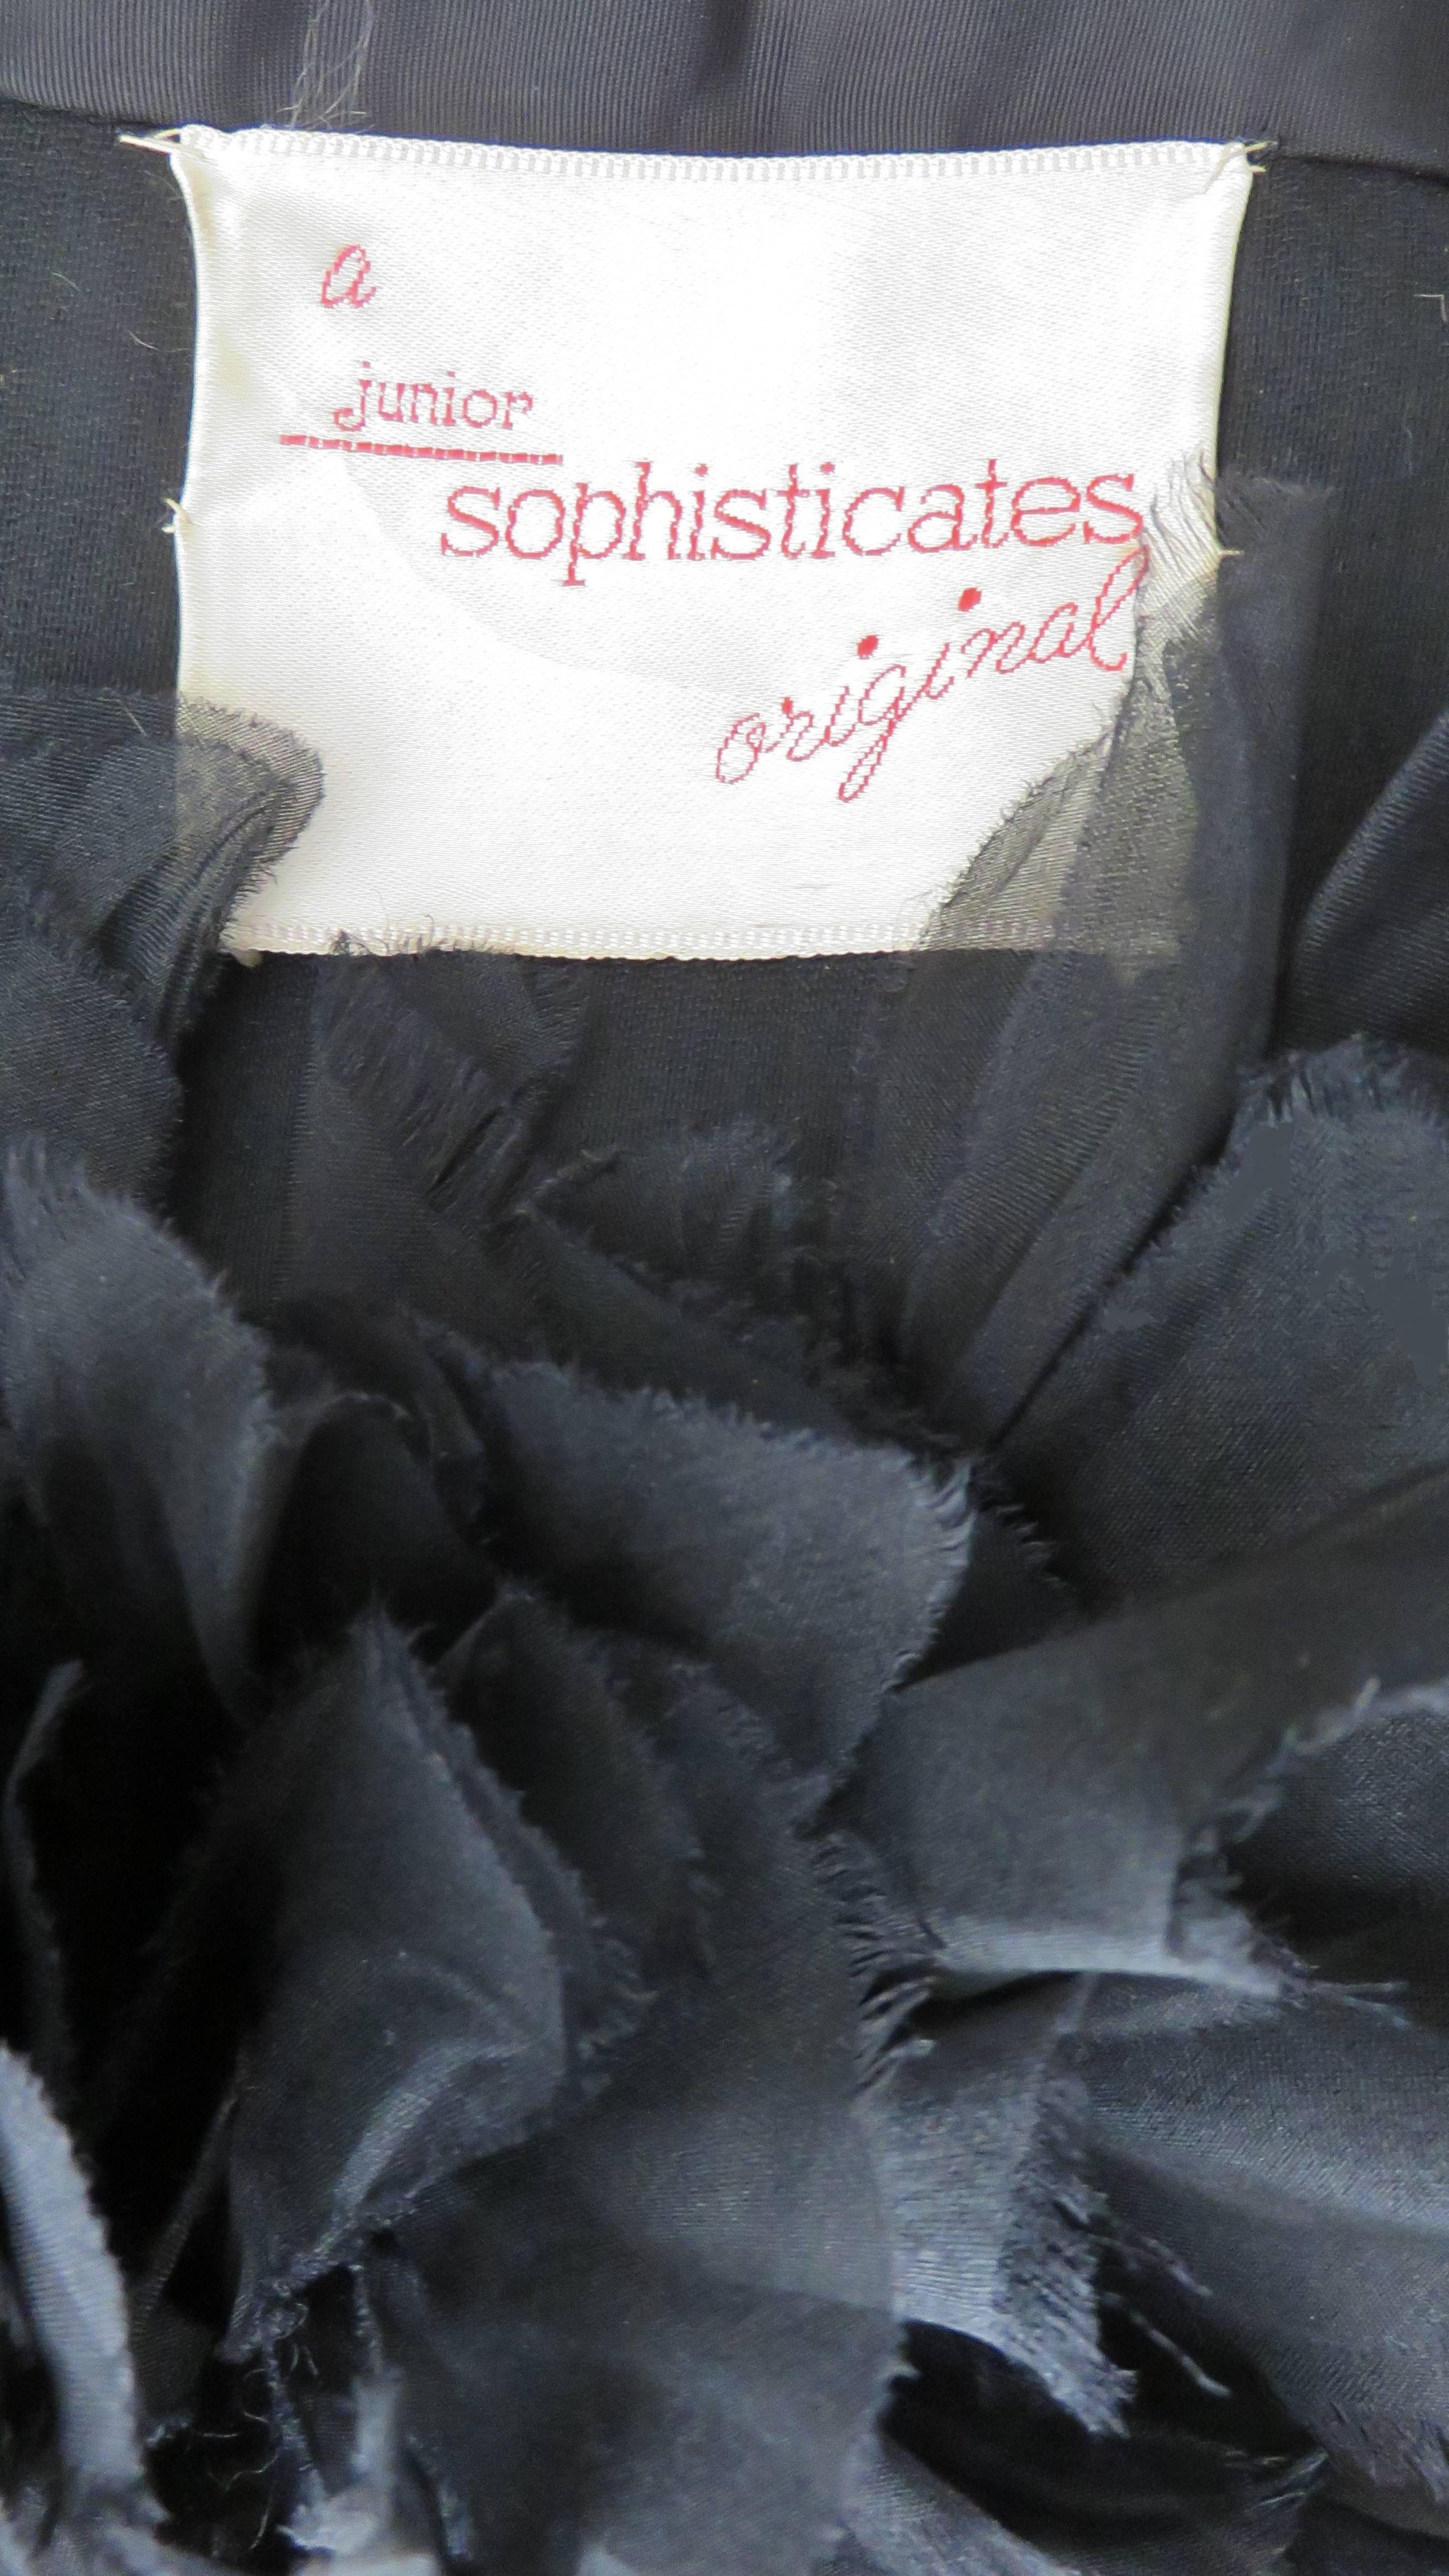  Veste en soie des années 1960 avec bordure en organza en vente 5